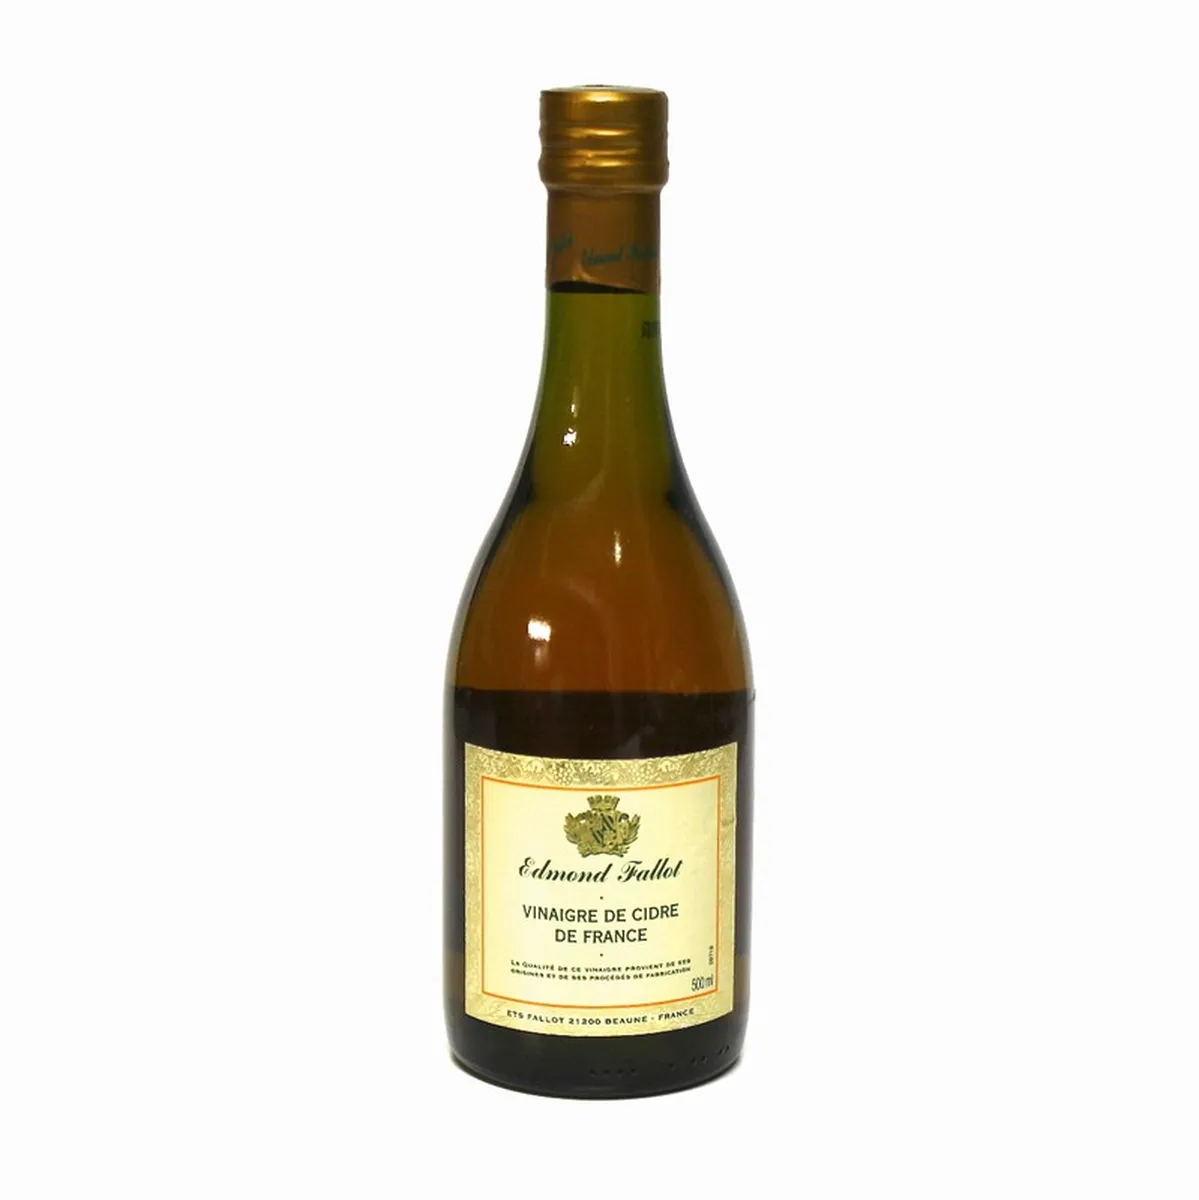 cider vinegar of france edmond fallot 50 cl